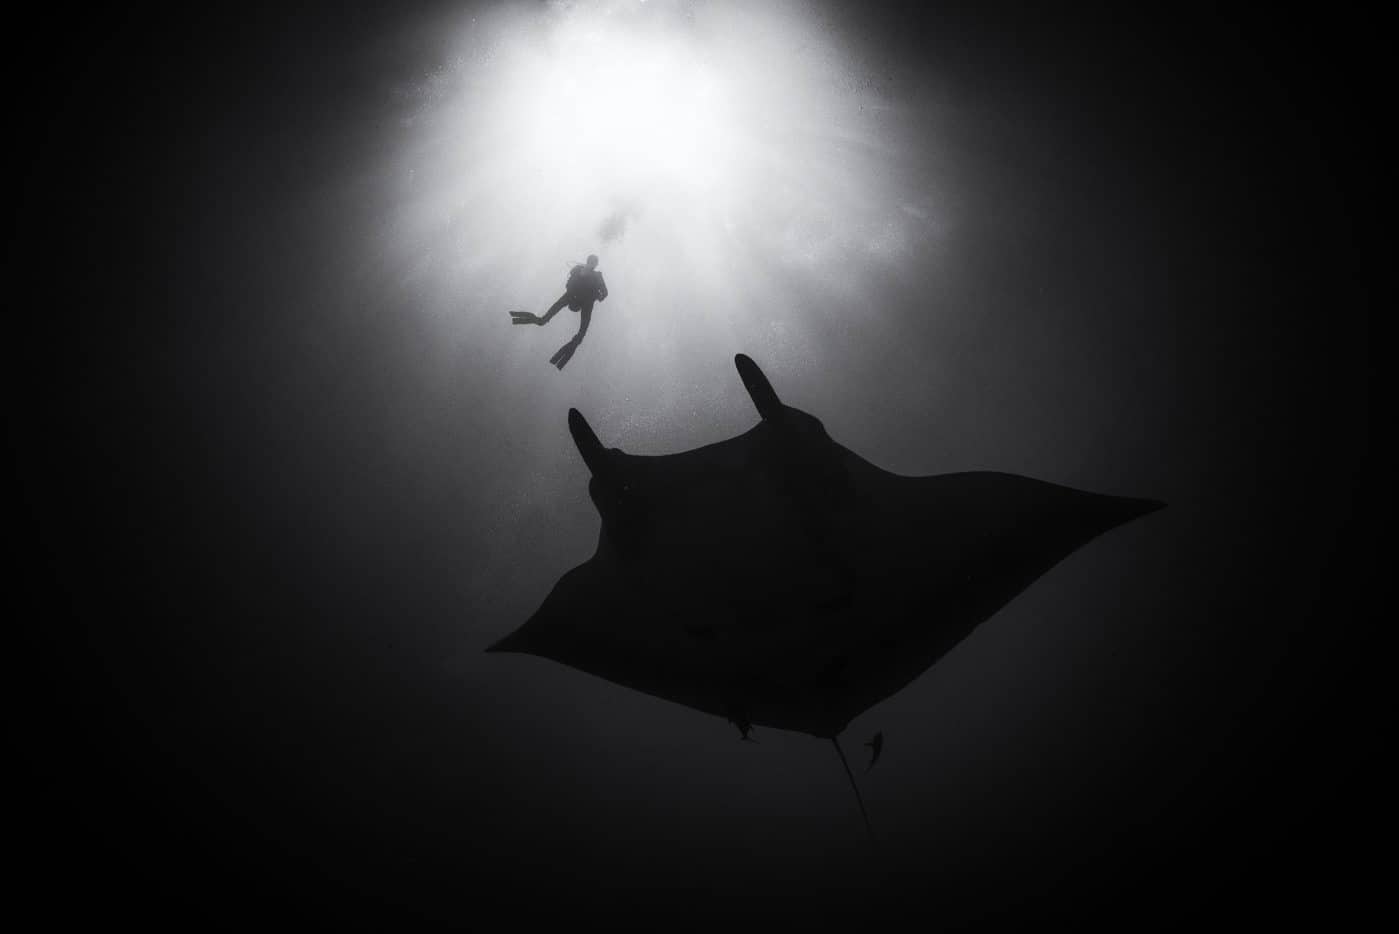 David duChemin on His Underwater Photography (Podcast 535)